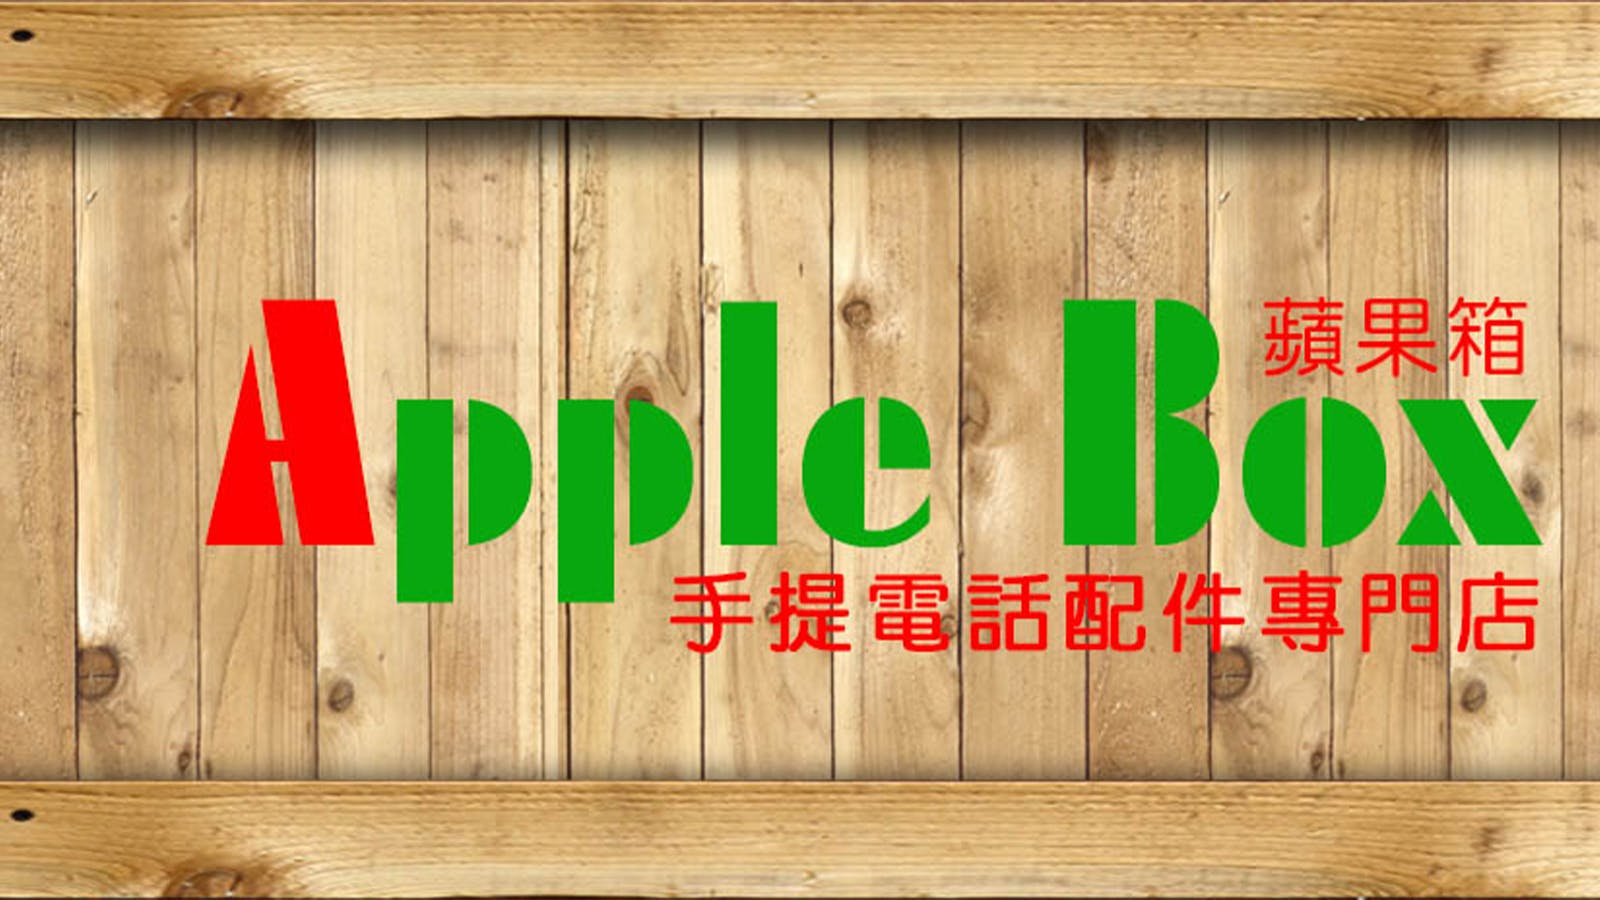 Apple Boxes